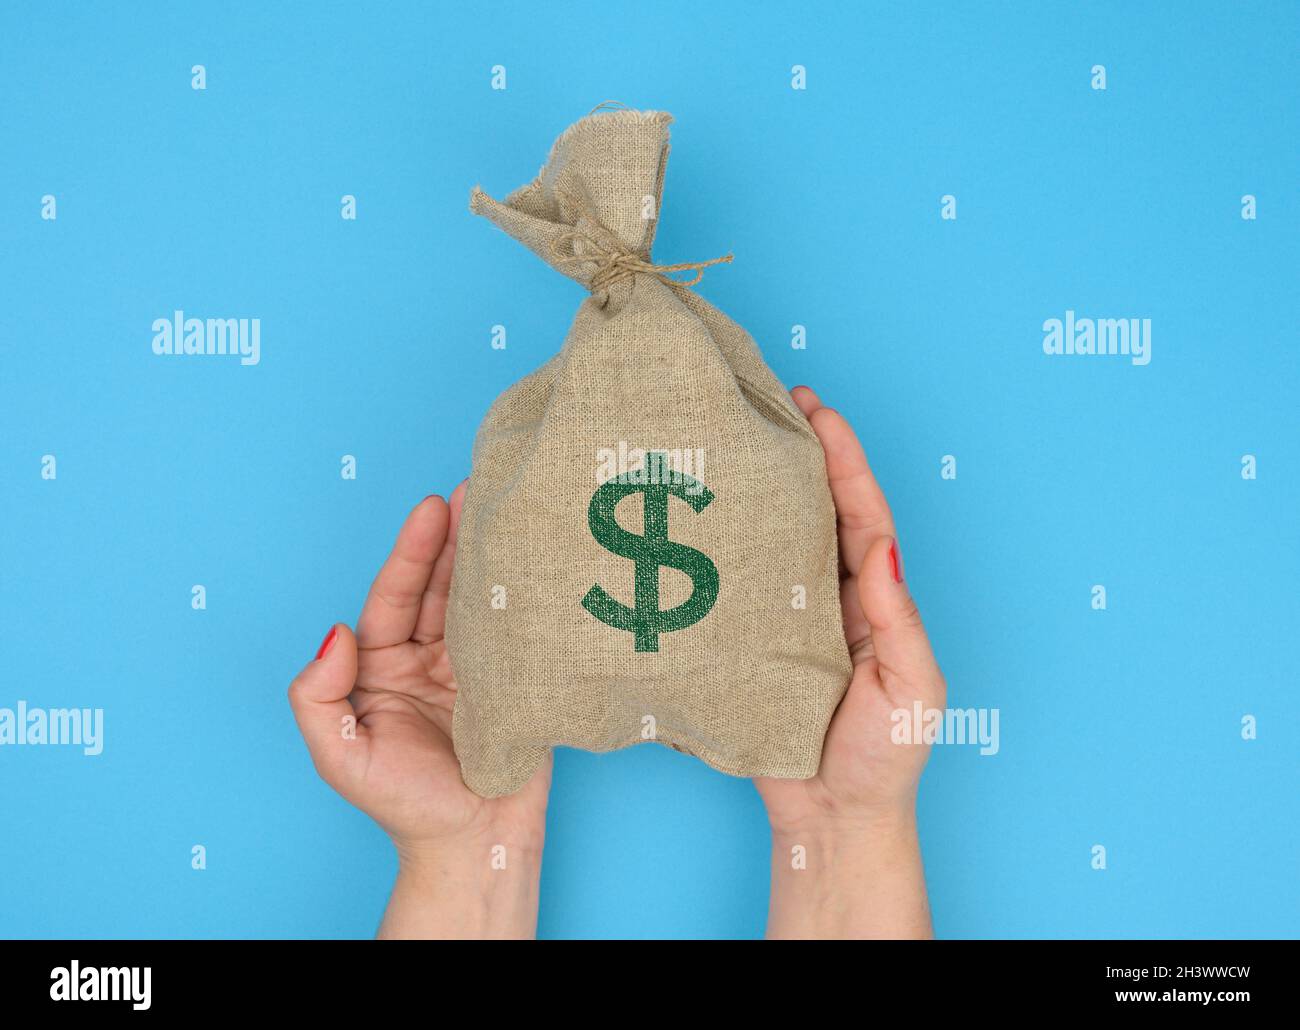 Sack bag full of money in the room Stock Photo - Alamy